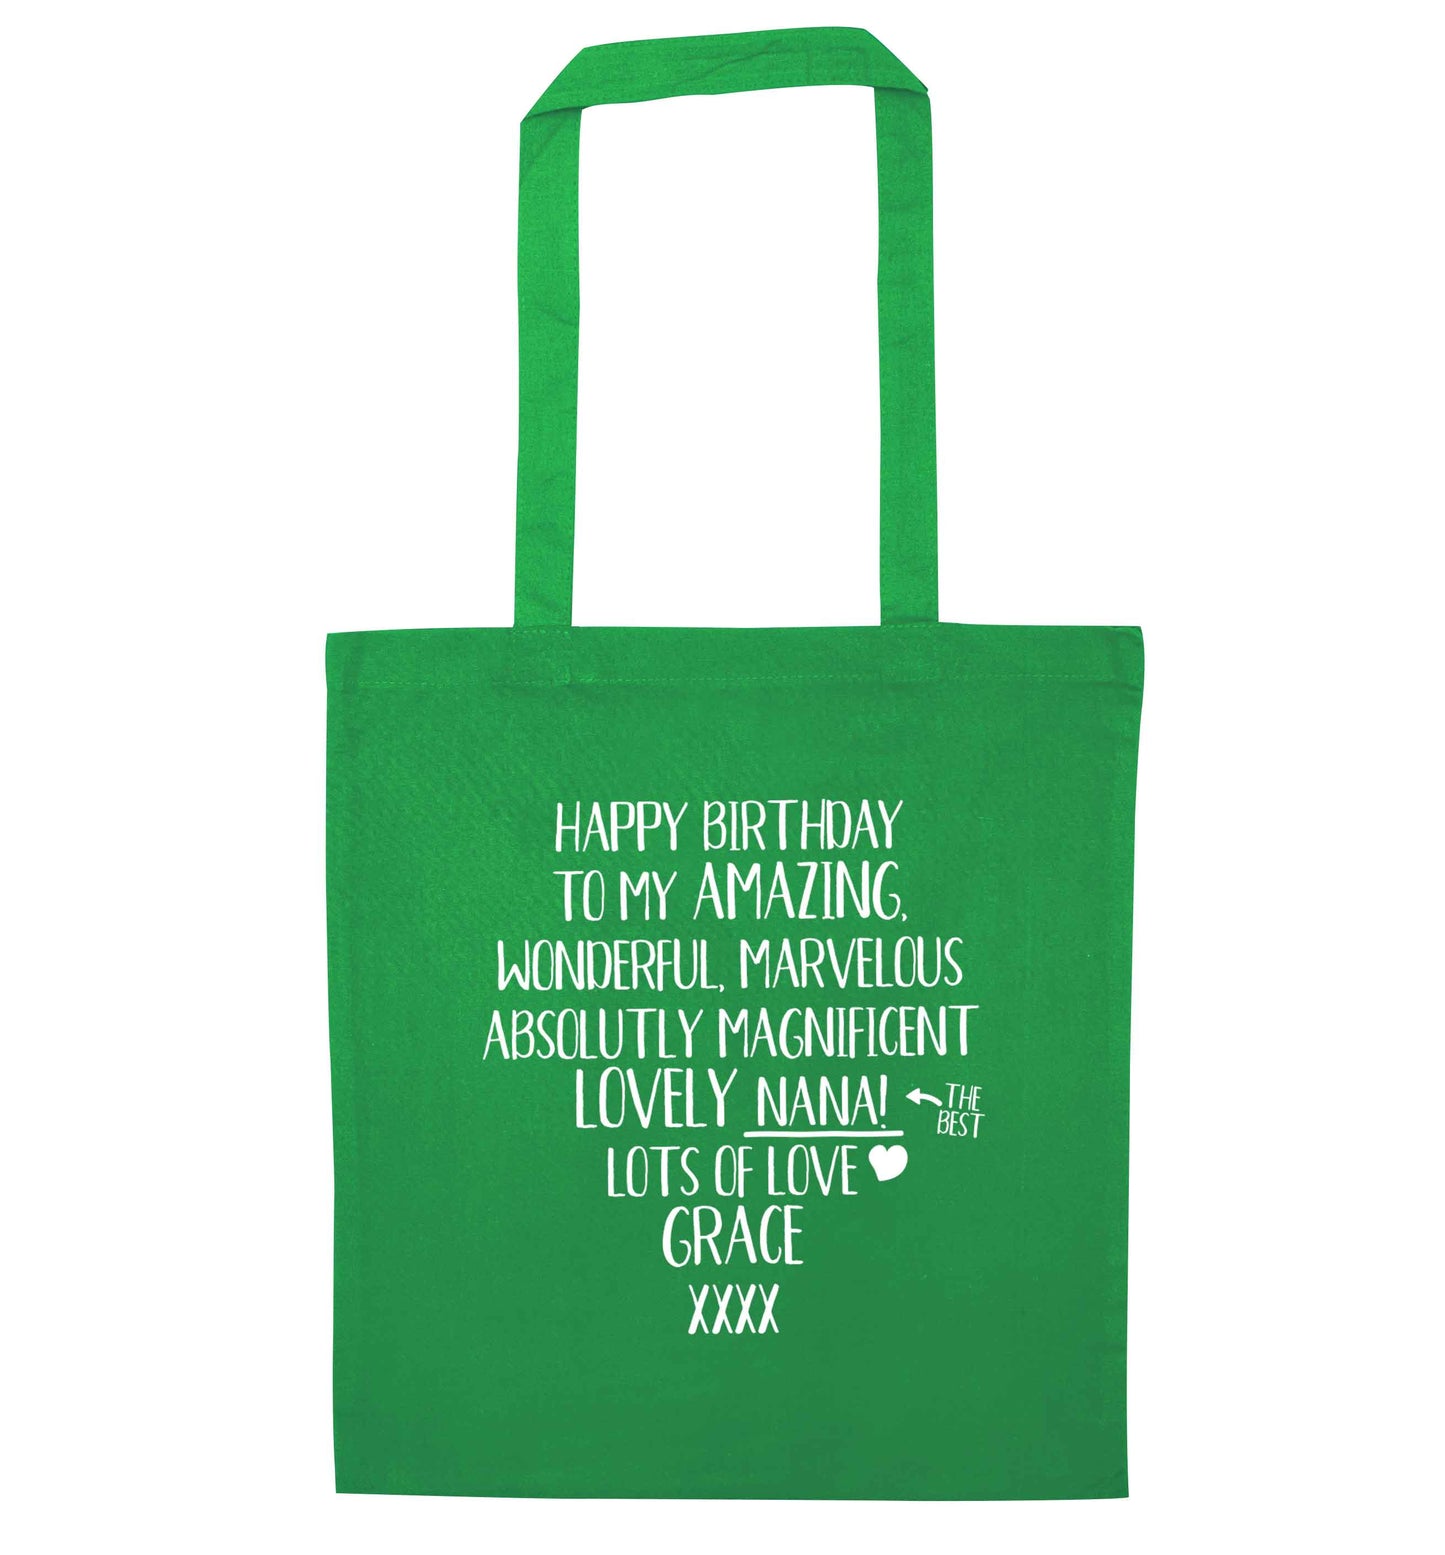 Personalised happy birthday to my amazing, wonderful, lovely nana green tote bag